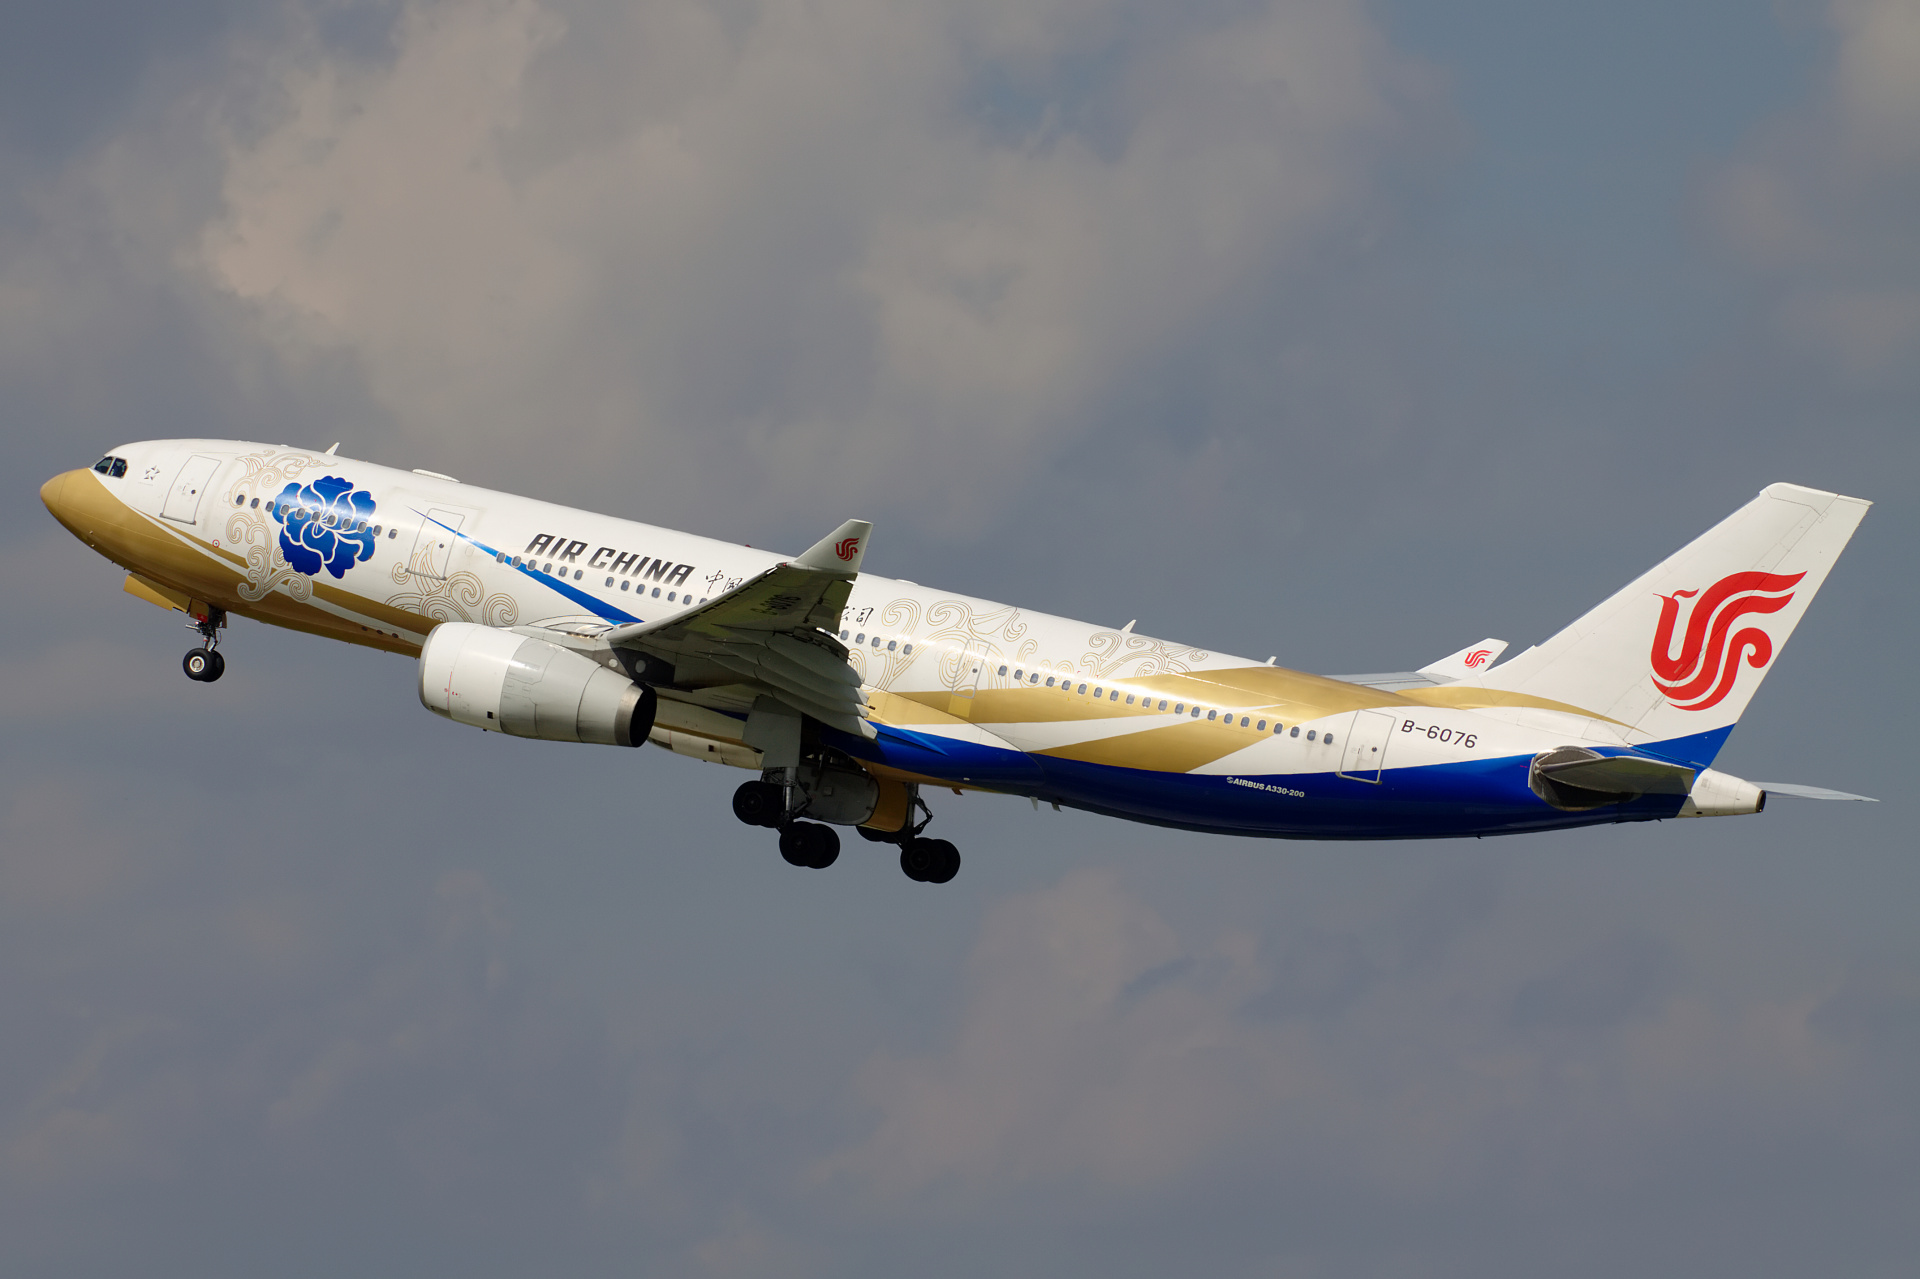 B-6076 (Zichen Hao livery) (Aircraft » EPWA Spotting » Airbus A330-200 » Air China)